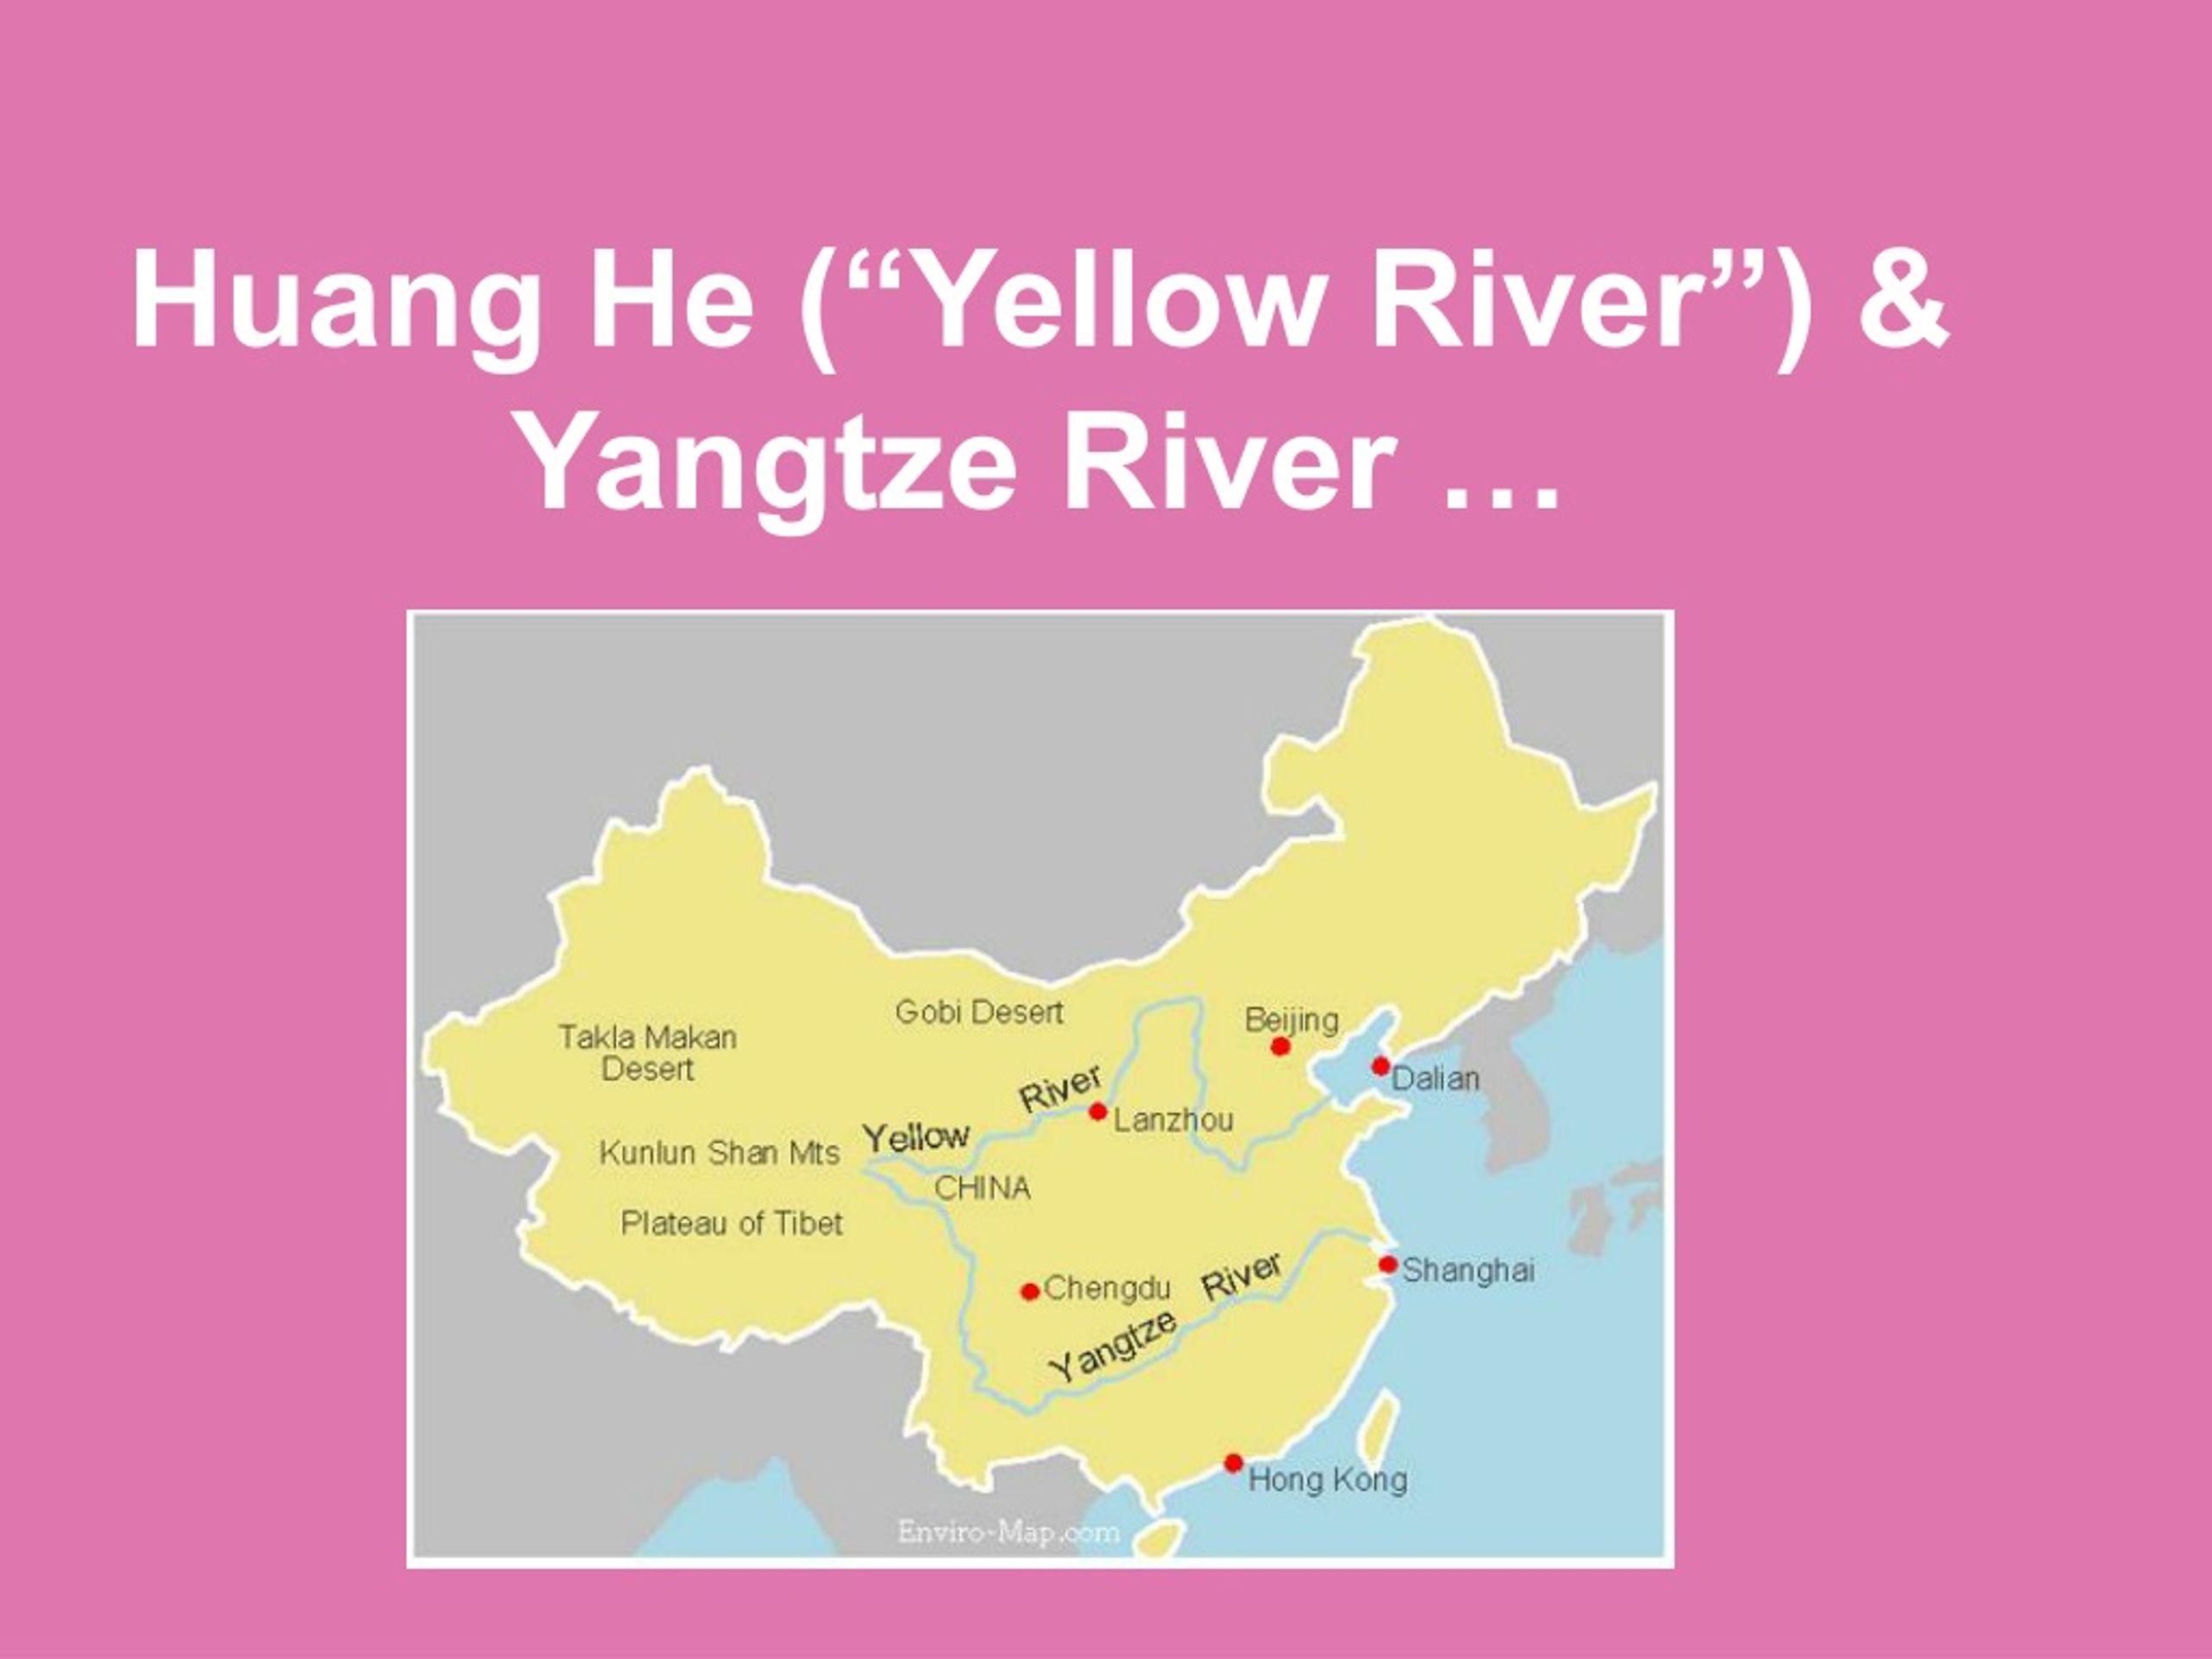 PPT - Huang He (“Yellow River”) & Yangtze River … PowerPoint ...